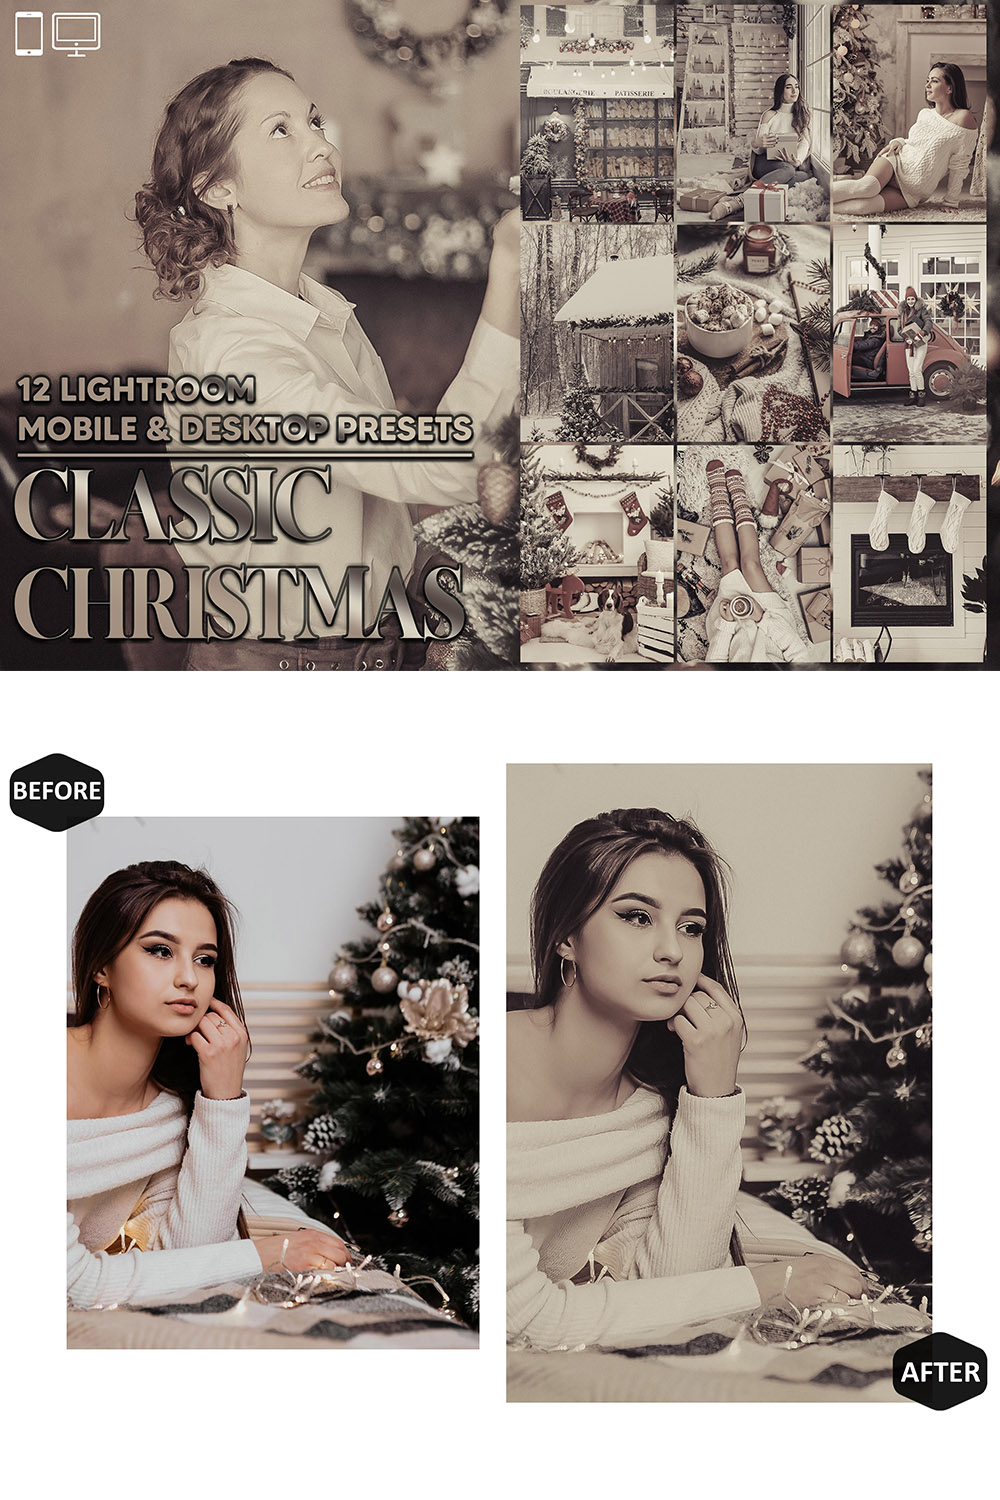 12 Classic Christmas Lightroom Presets, Vintage Mobile Preset, December Desktop LR Filter Scheme Lifestyle Theme For Portrait, Instagram pinterest preview image.